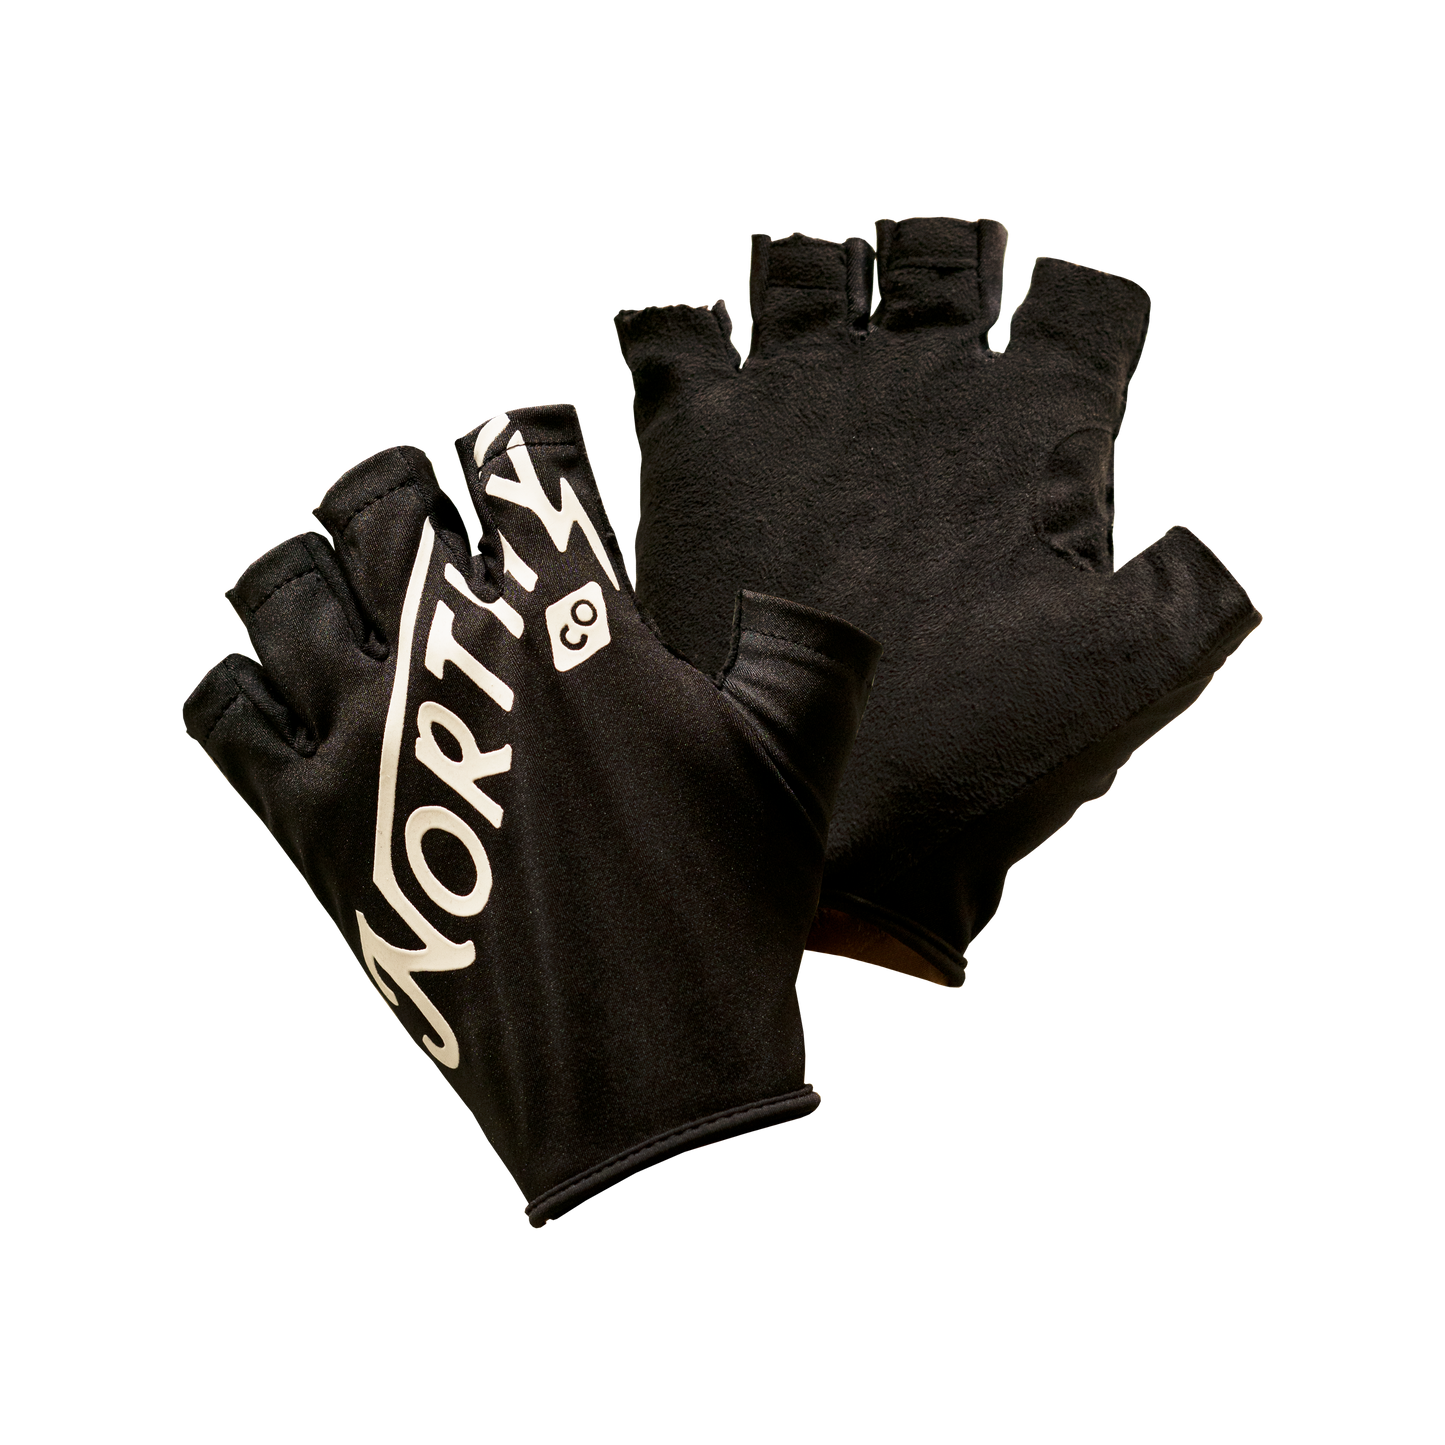 Virgo Cycling Gloves